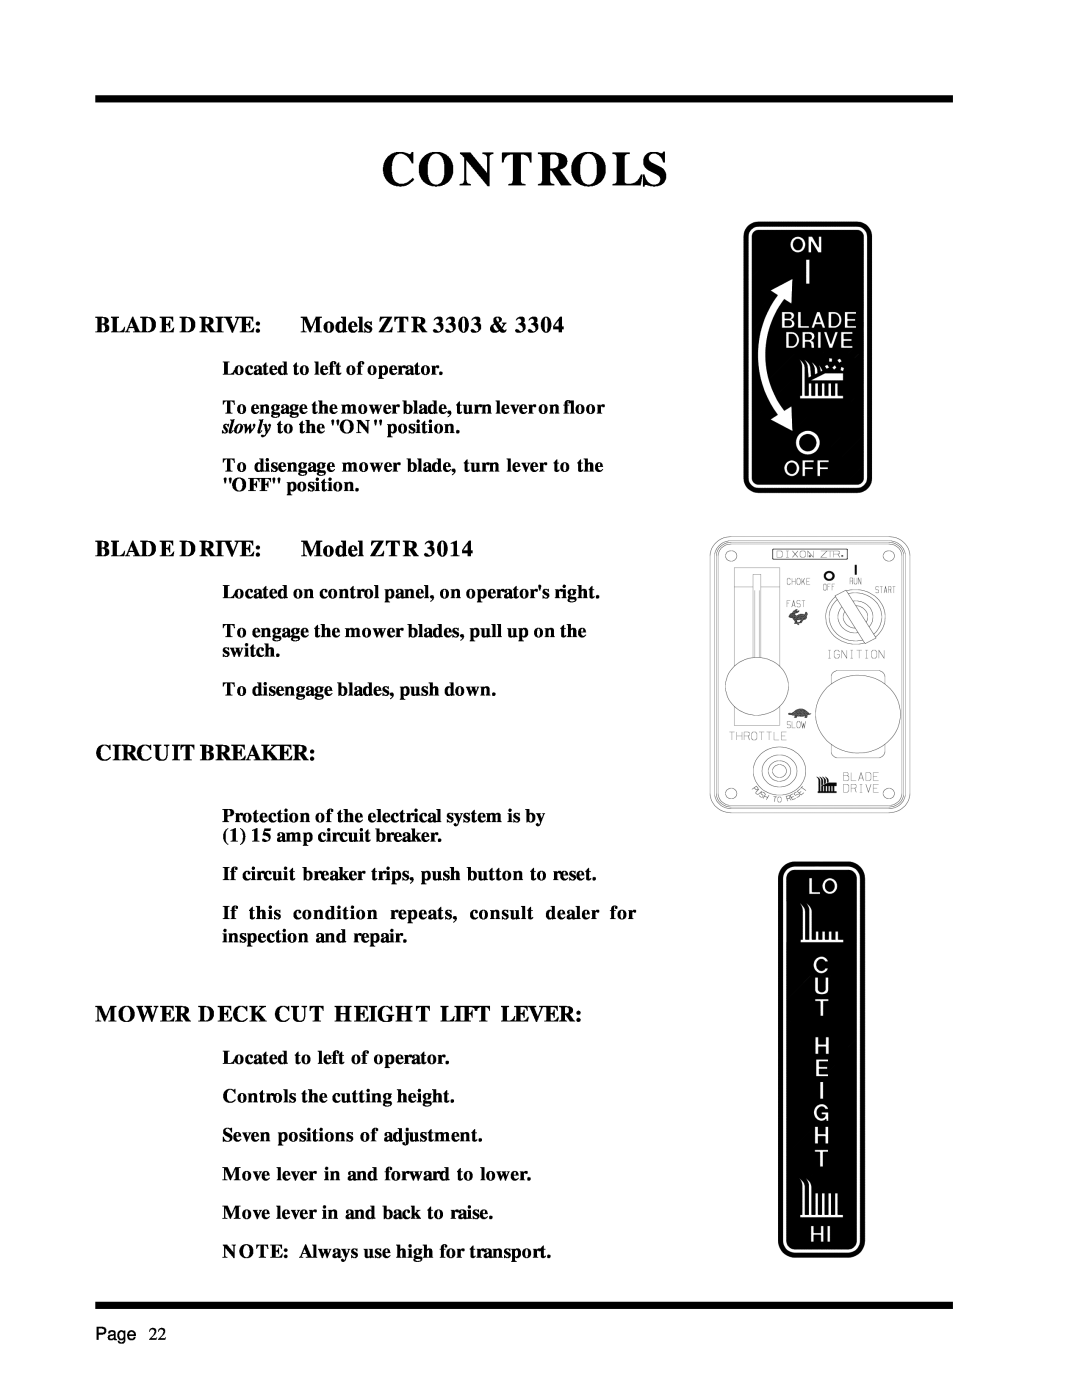 Dixon 1855-0599 Controls, BLADE DRIVE Models ZTR, BLADE DRIVE Model ZTR, Circuit Breaker, Mower Deck Cut Height Lift Lever 